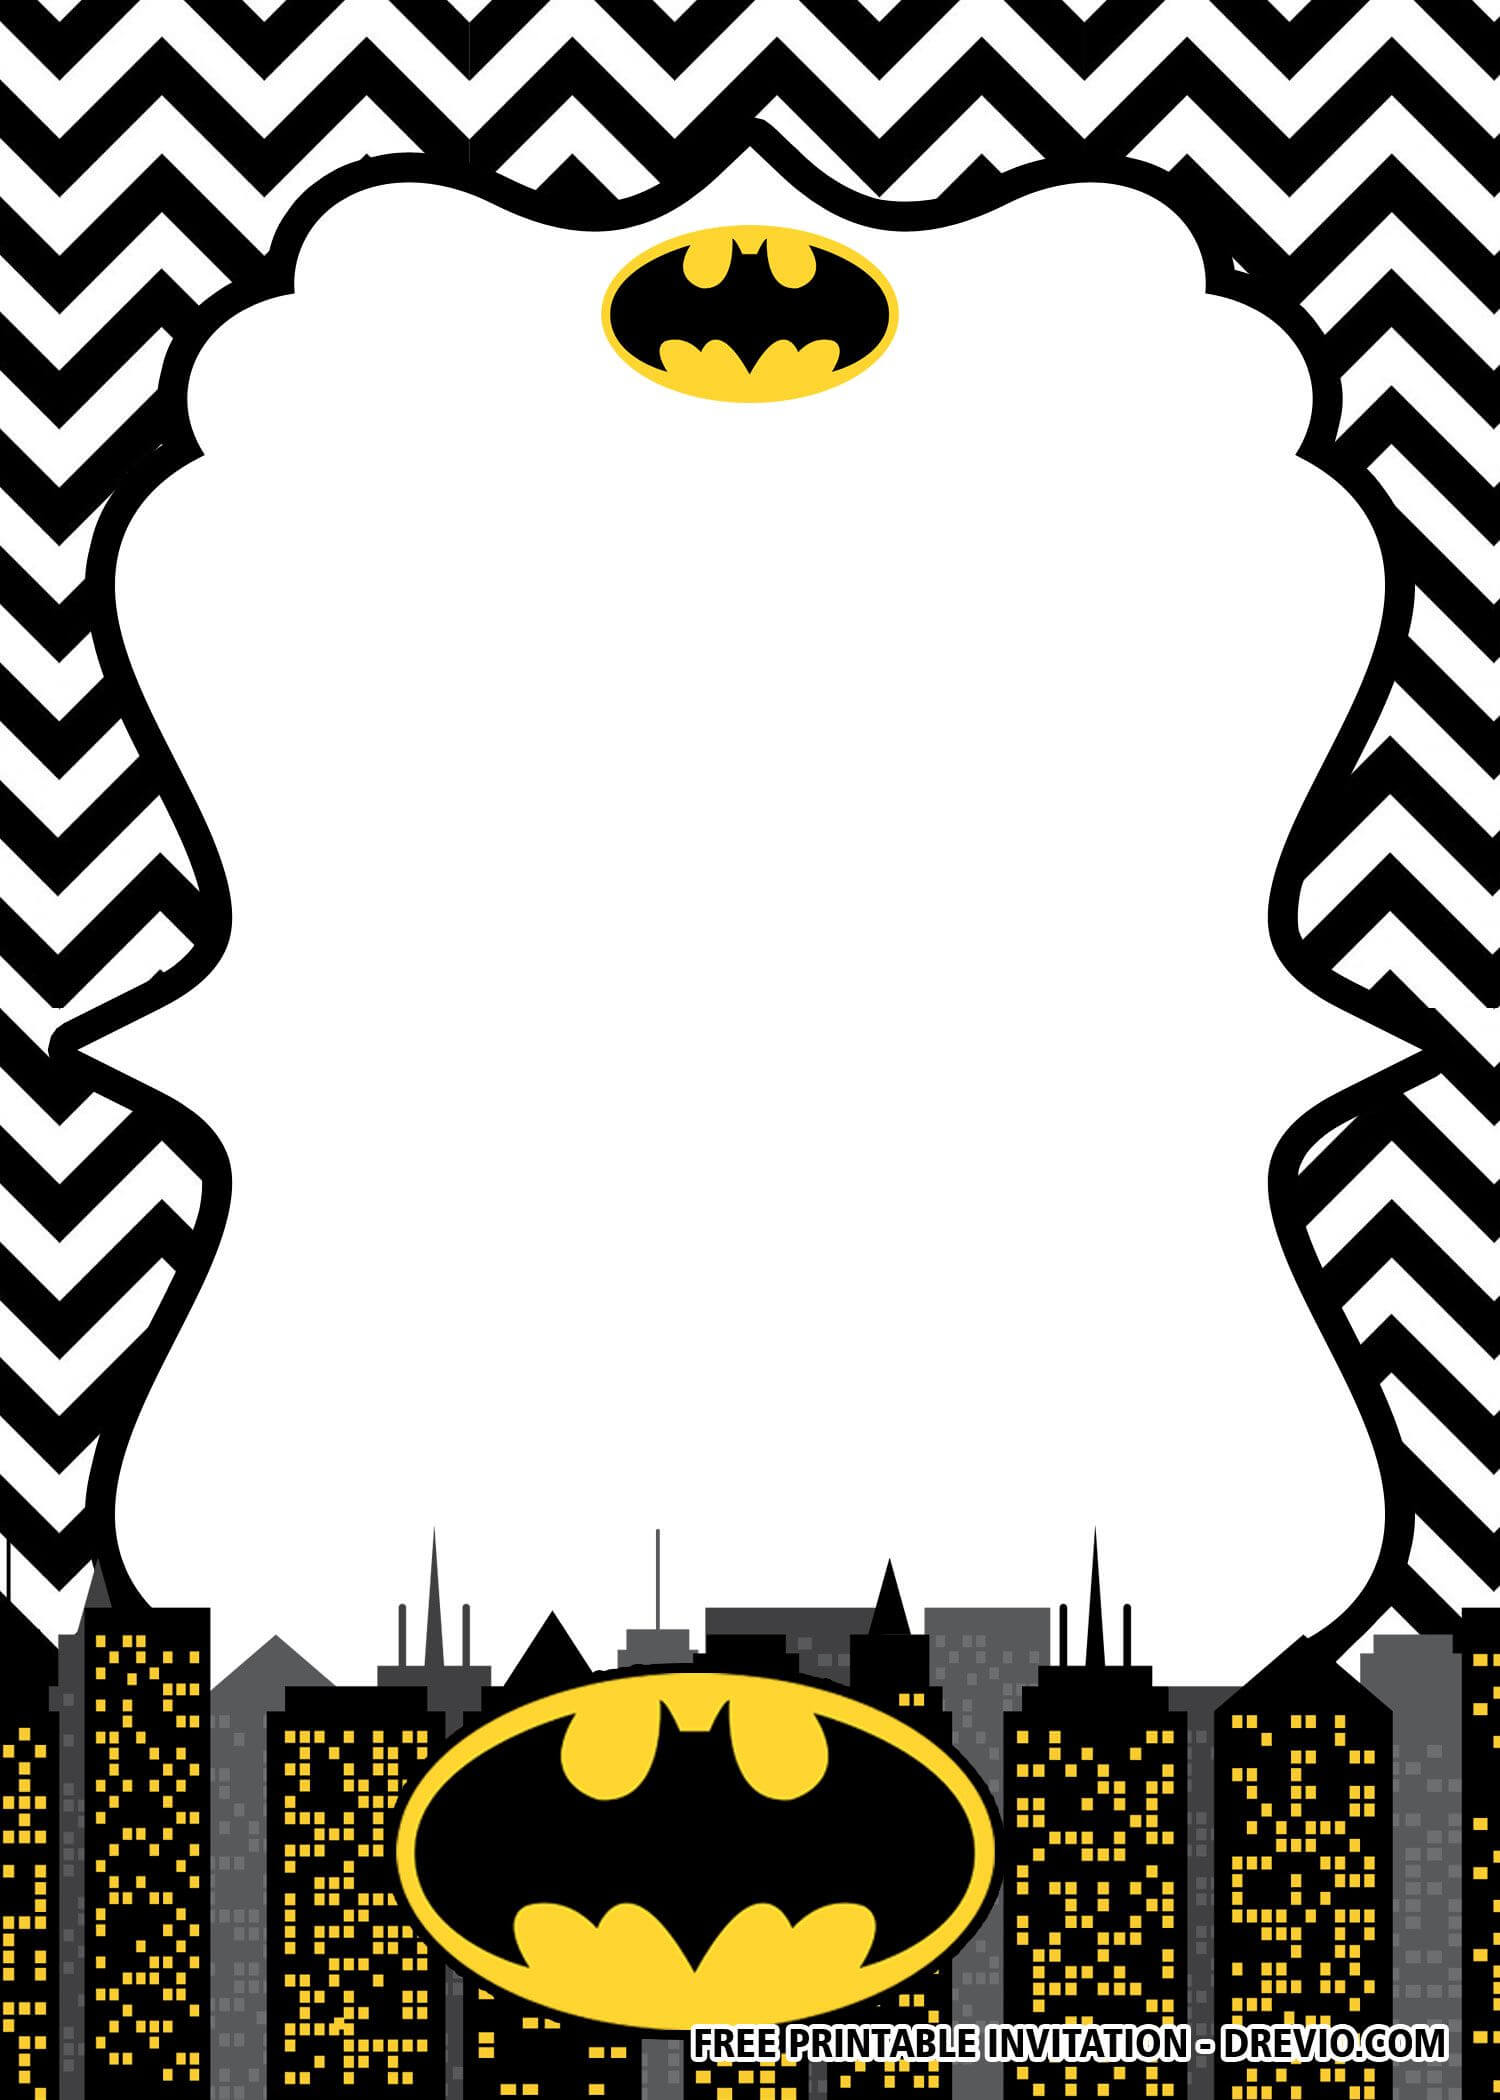 Free Printable Batman Birthday Invitation Templates | Batman With Batman Birthday Card Template